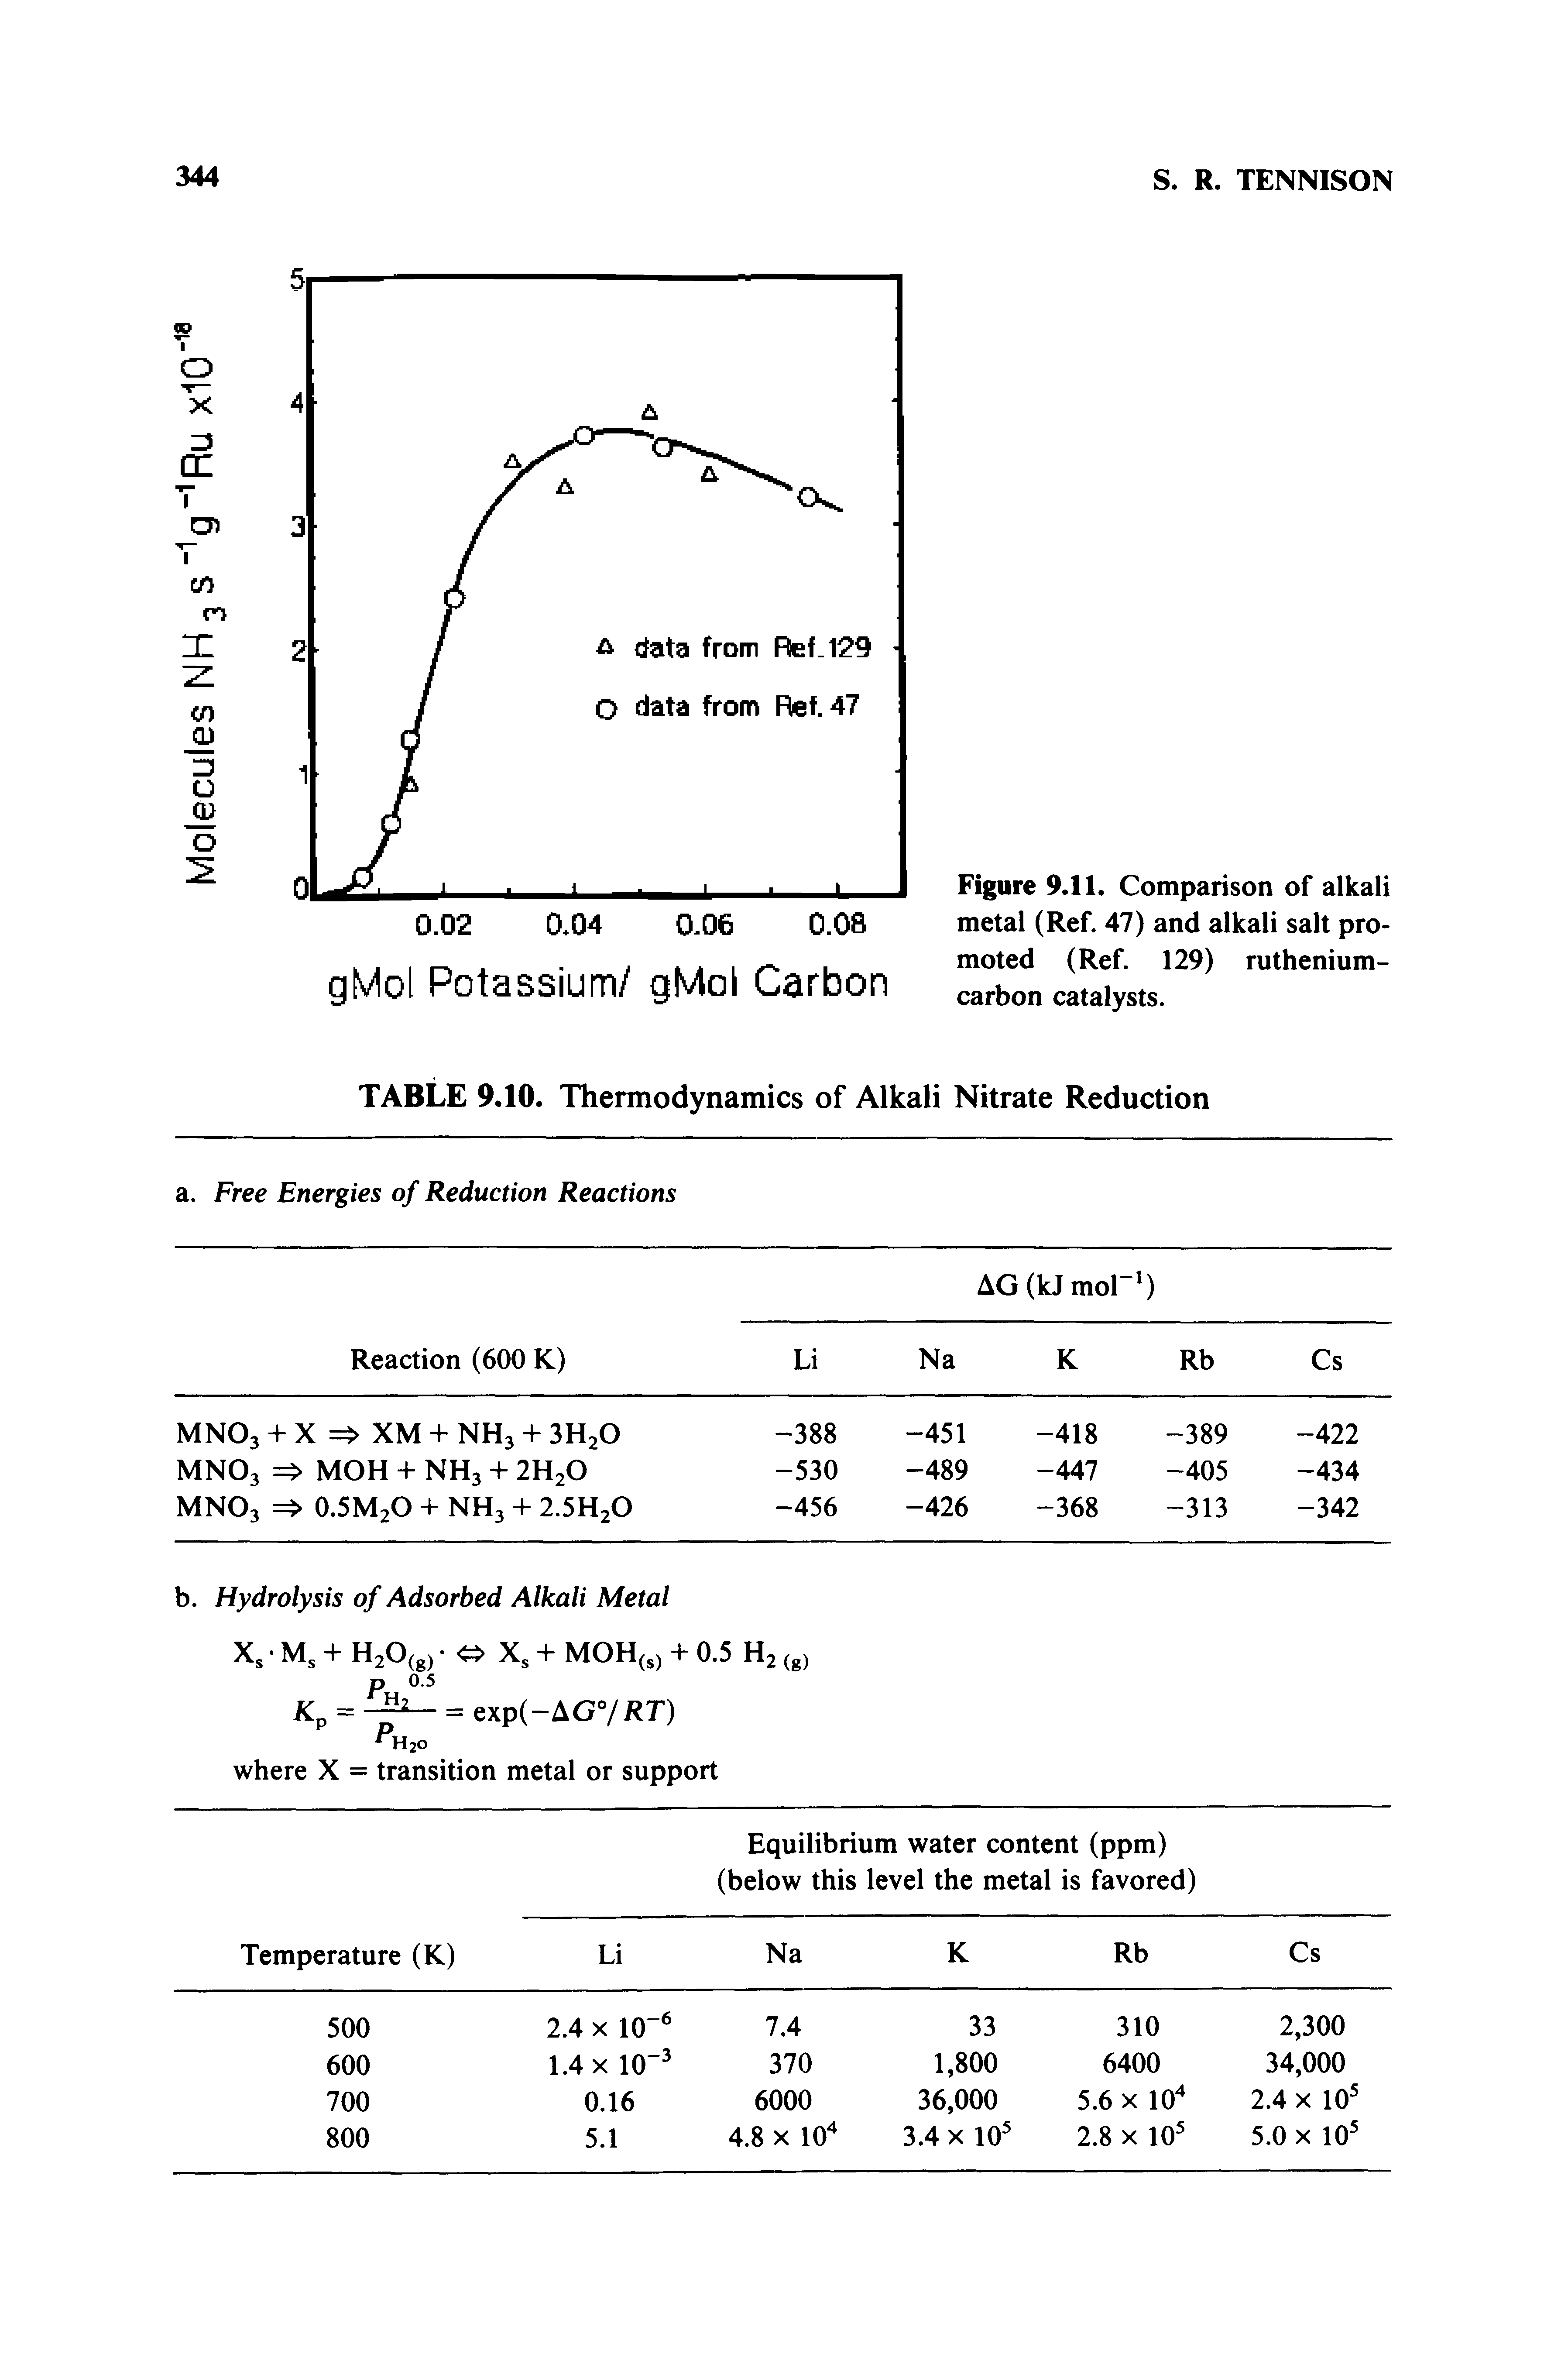 Figure 9.11. Comparison of alkali metal (Ref. 47) and alkali salt promoted (Ref. 129) ruthenium-carbon catalysts.